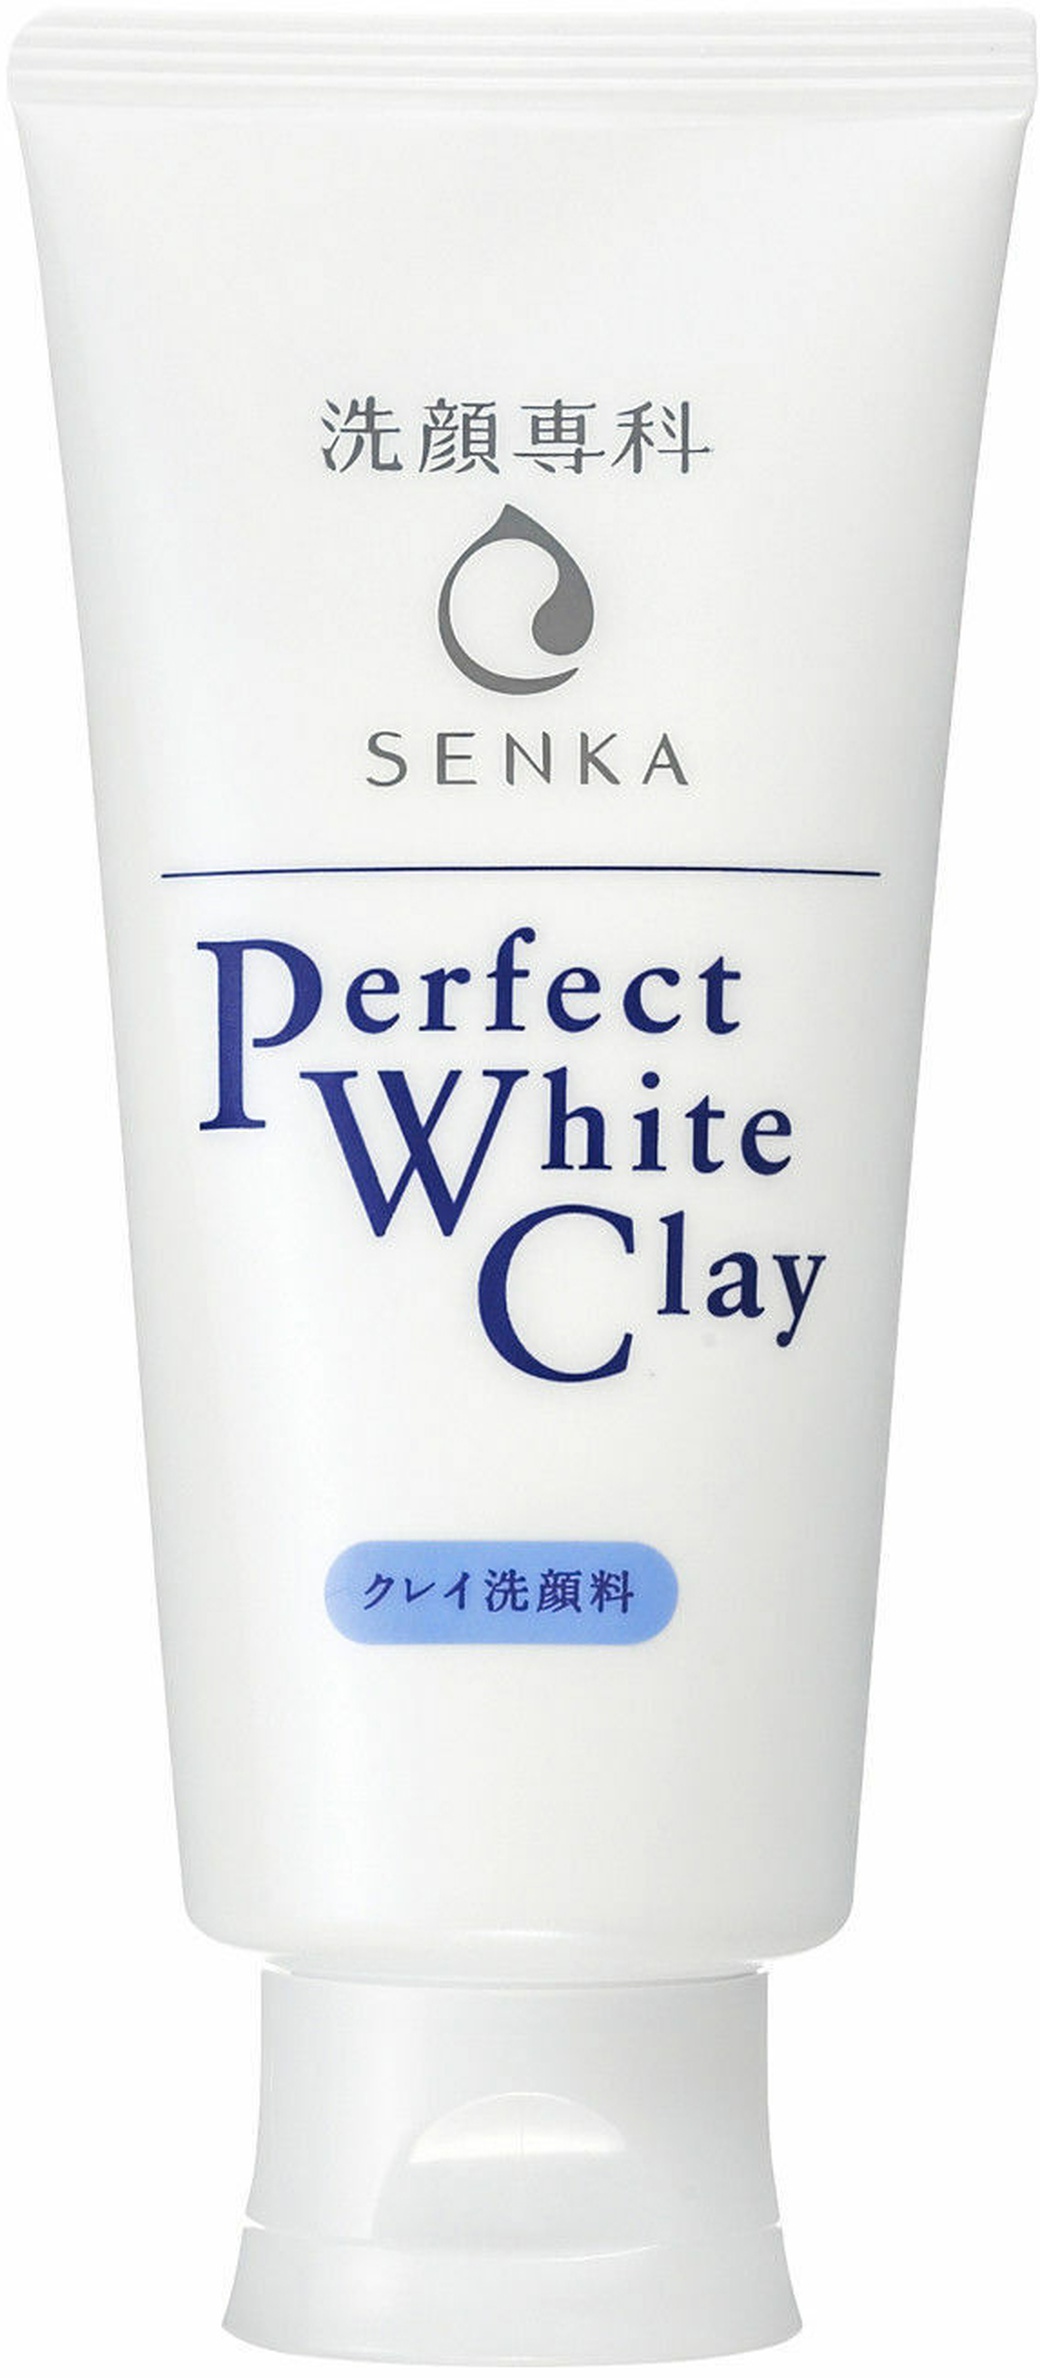 Shiseido "Perfect White Clay" Очищающая пенка для умывания, на основе белой глины, 120 г фото